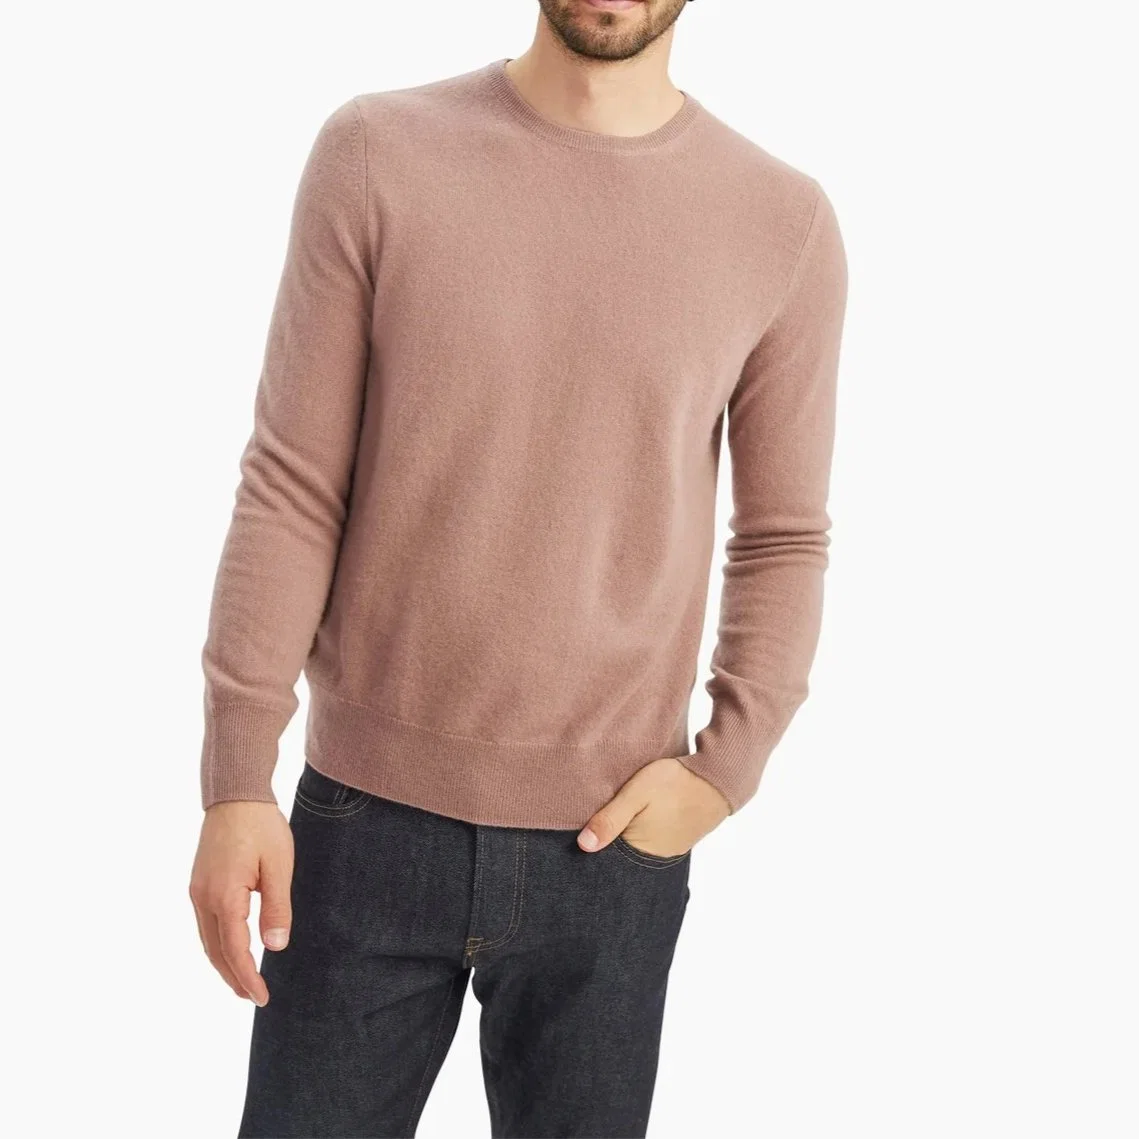 Original Cashmere Knitted Pullover Jumper Sweater Apparel T Shirt